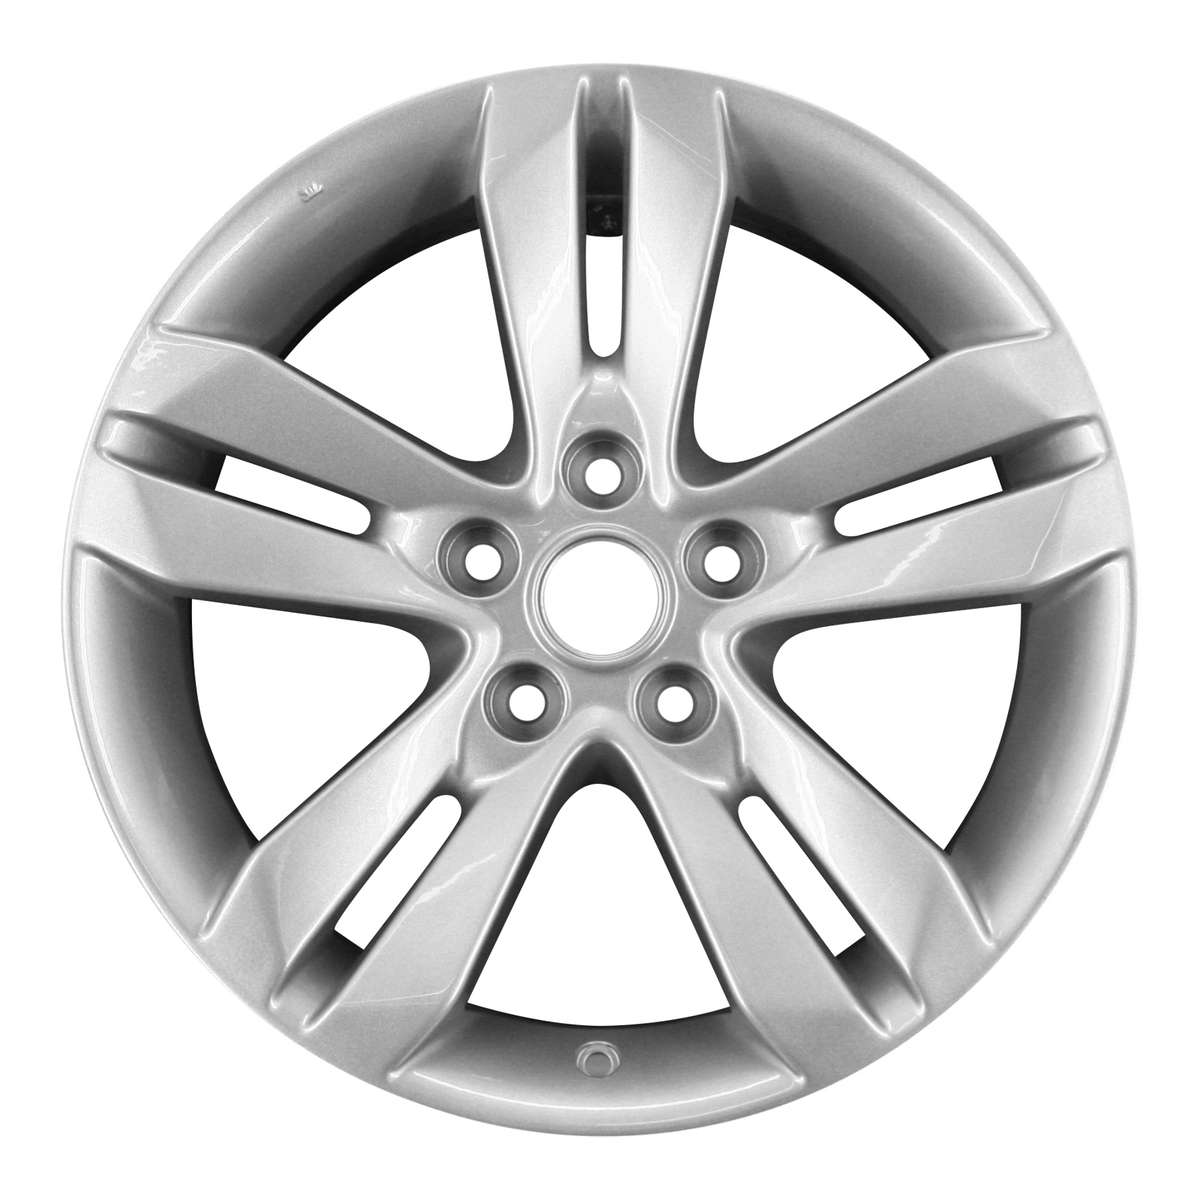 2012 Nissan Altima New 17" Replacement Wheel Rim RW62552S